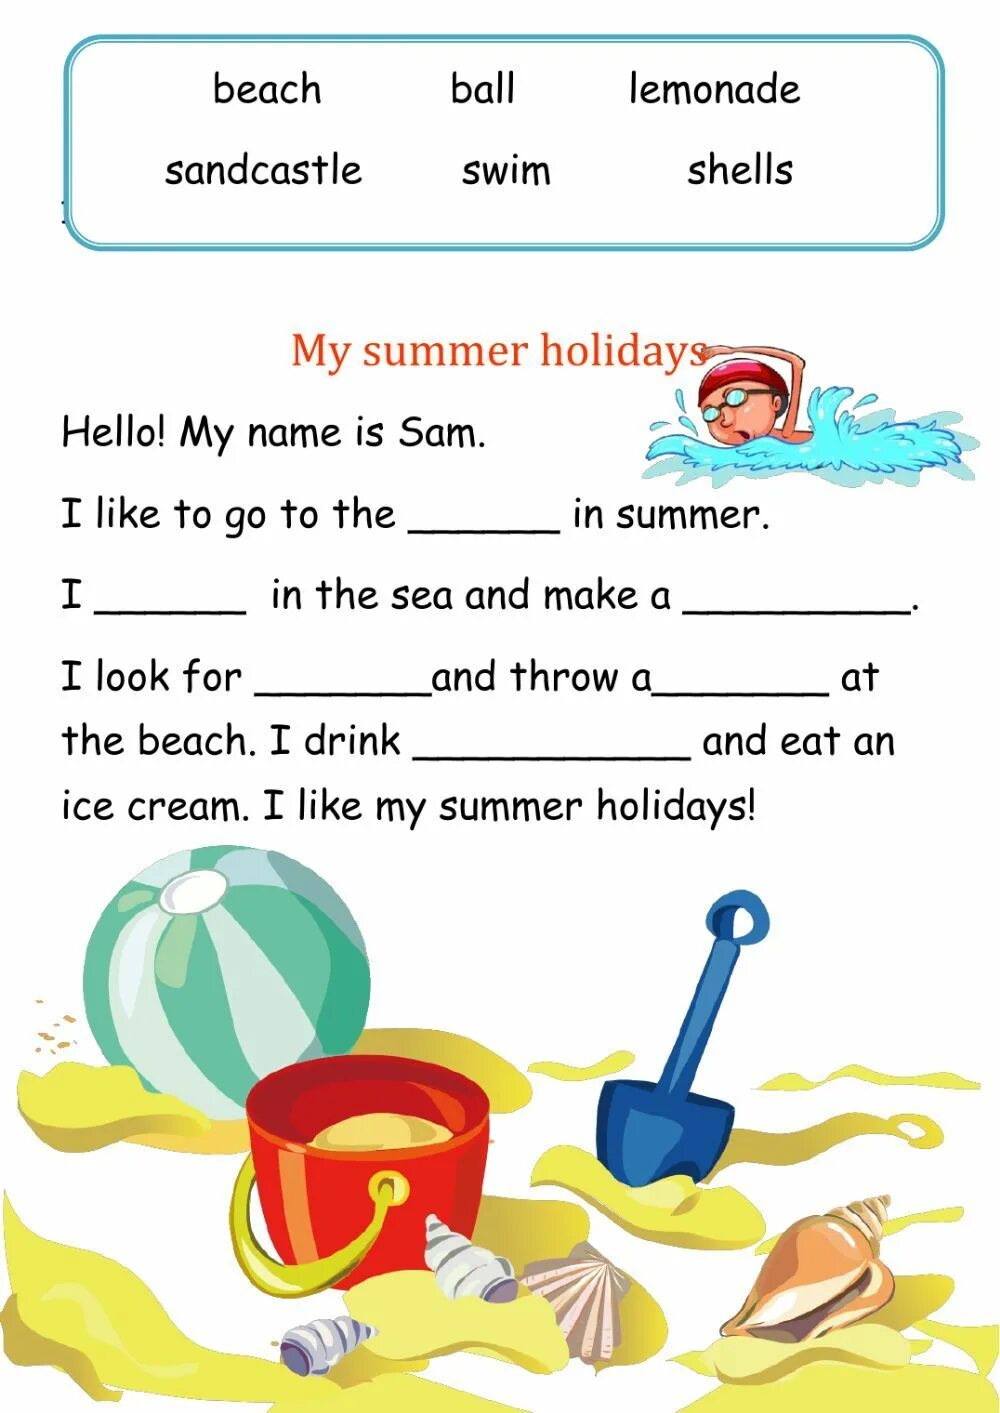 Text about holidays. Summer Holidays задания. Задания на Holidays activities английский. My Summer Holidays задания. Summer Holidays задания для детей.